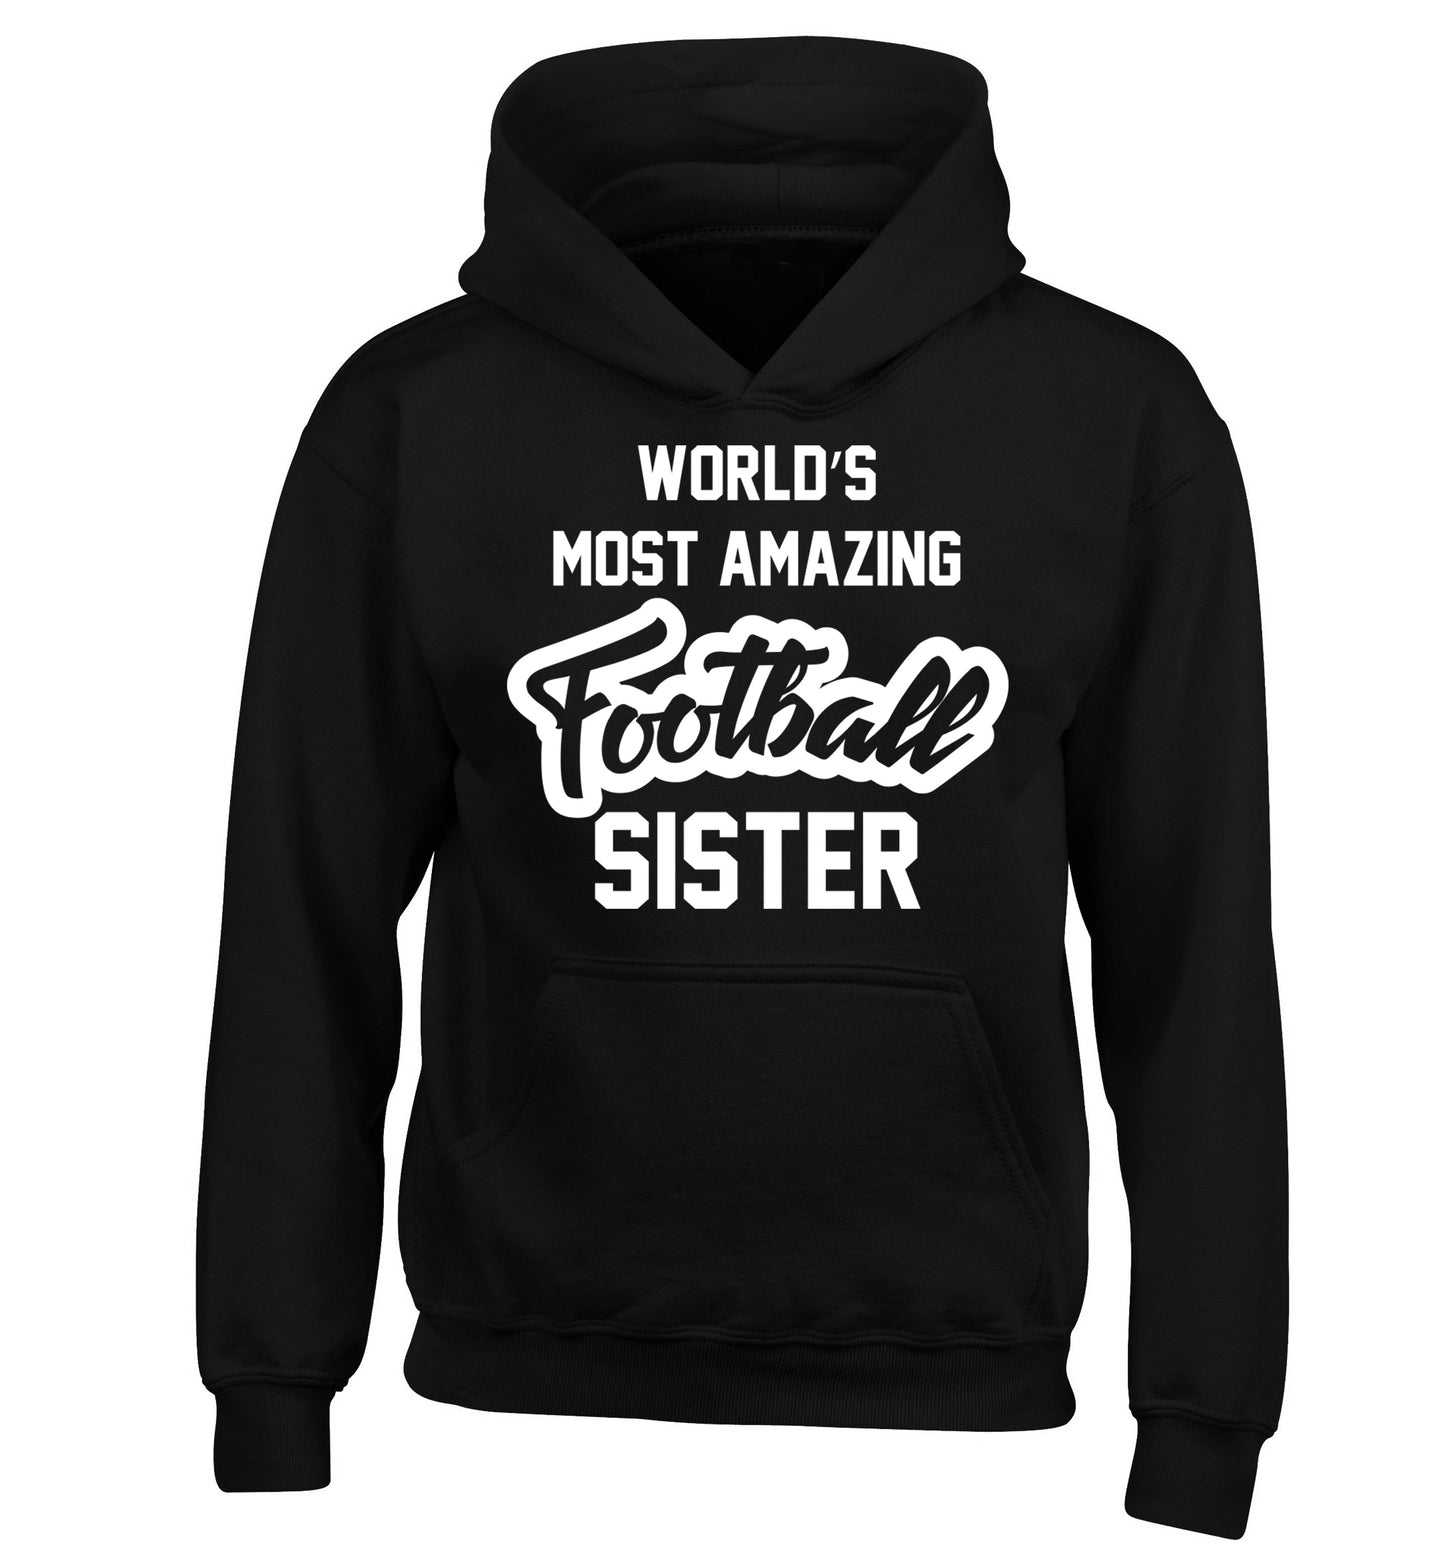 Worlds most amazing football sister children's black hoodie 12-14 Years